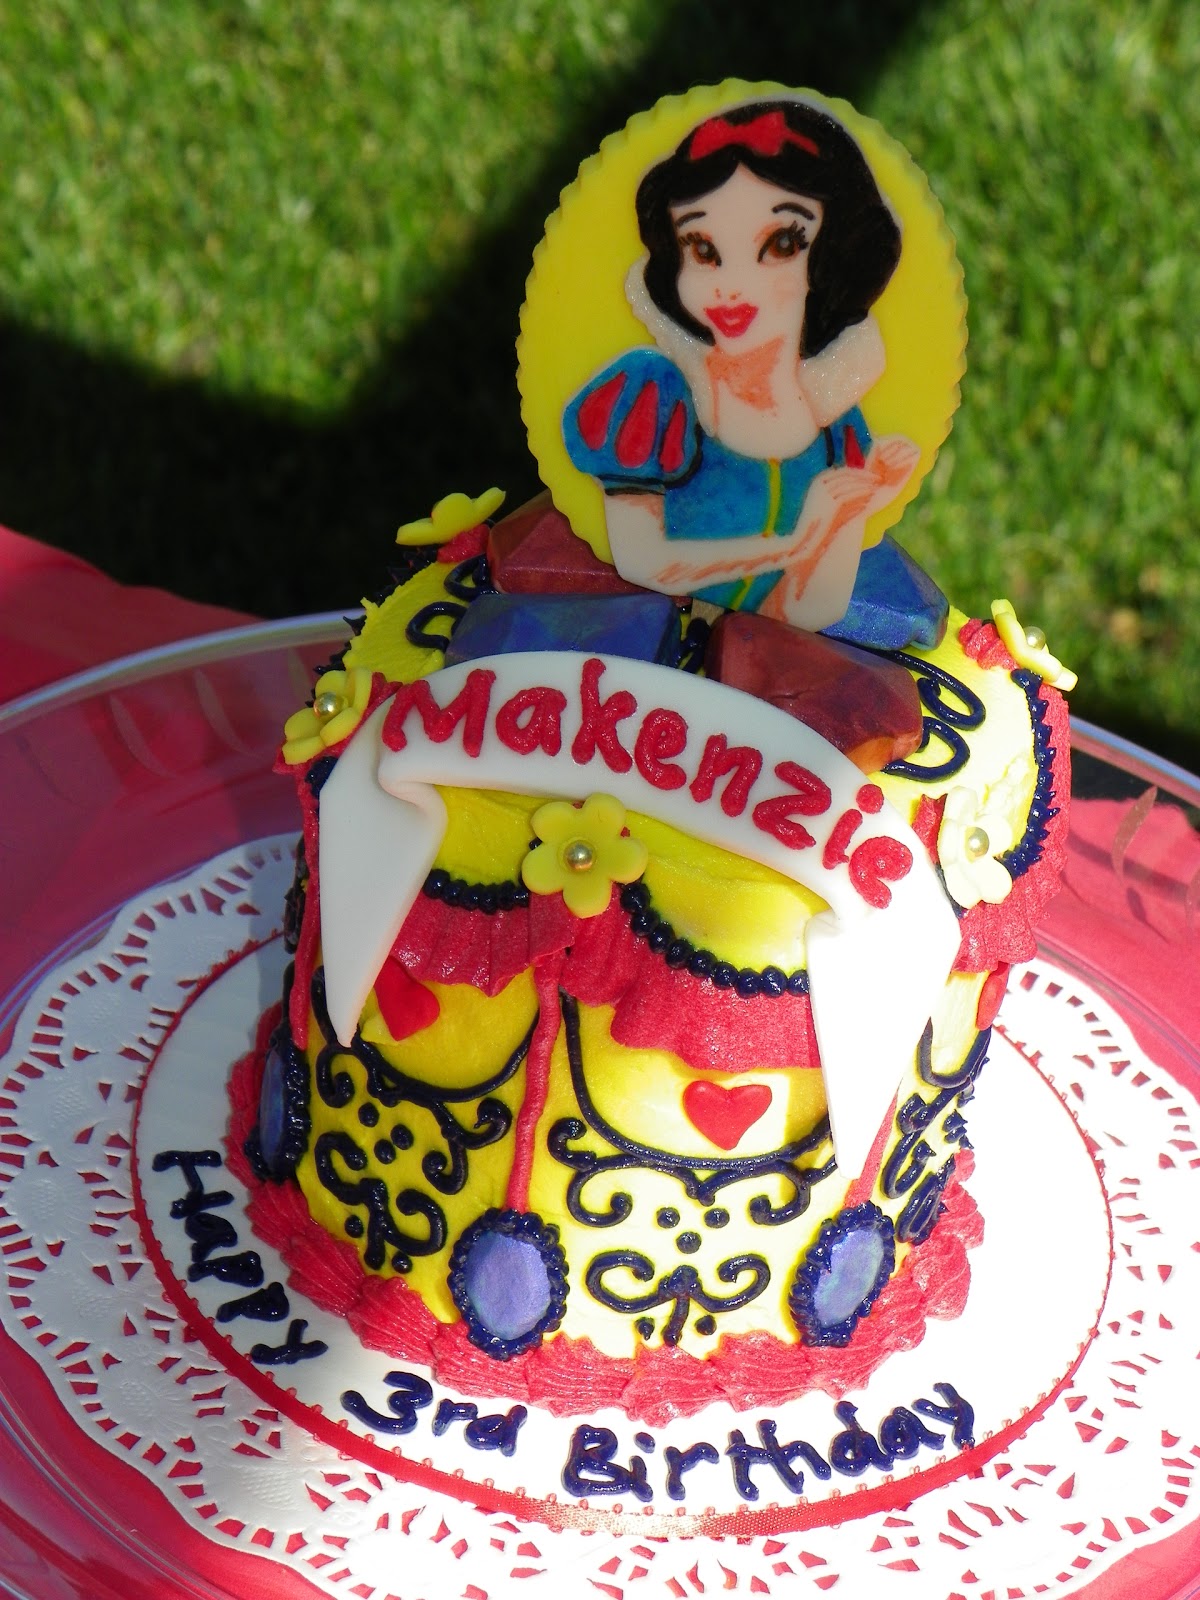 Disney Princess Mini Cakes and